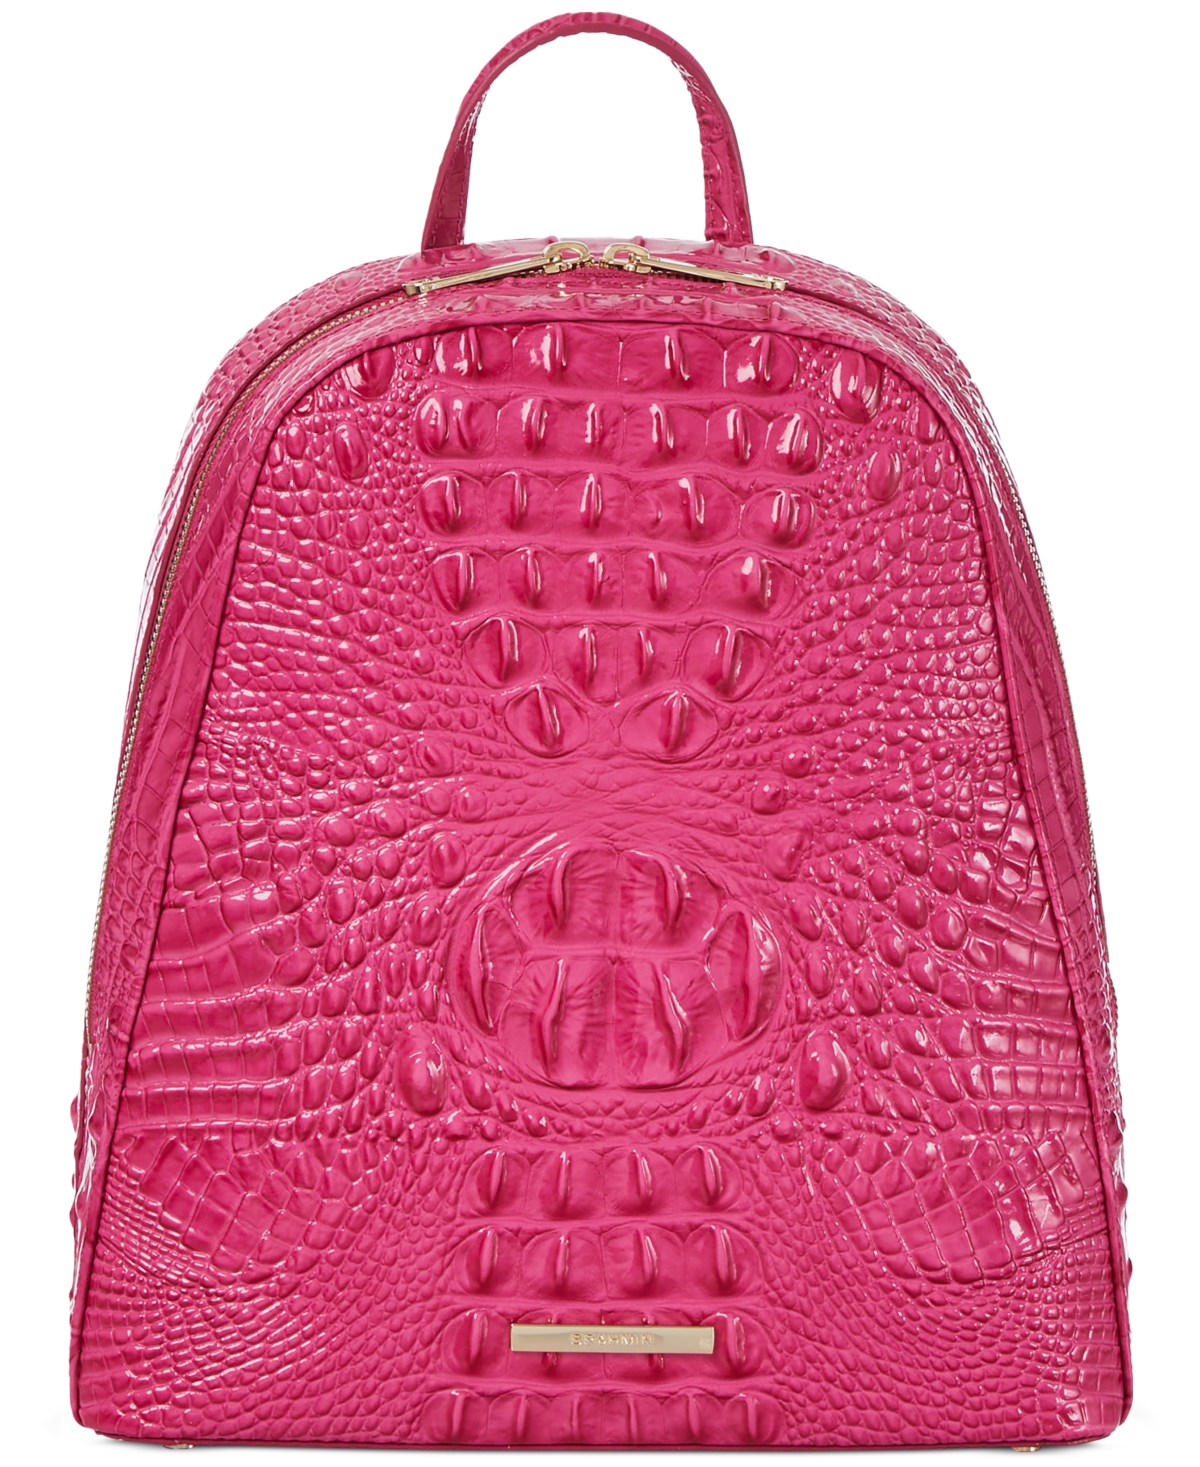 Nola Leather Backpack - Pecan